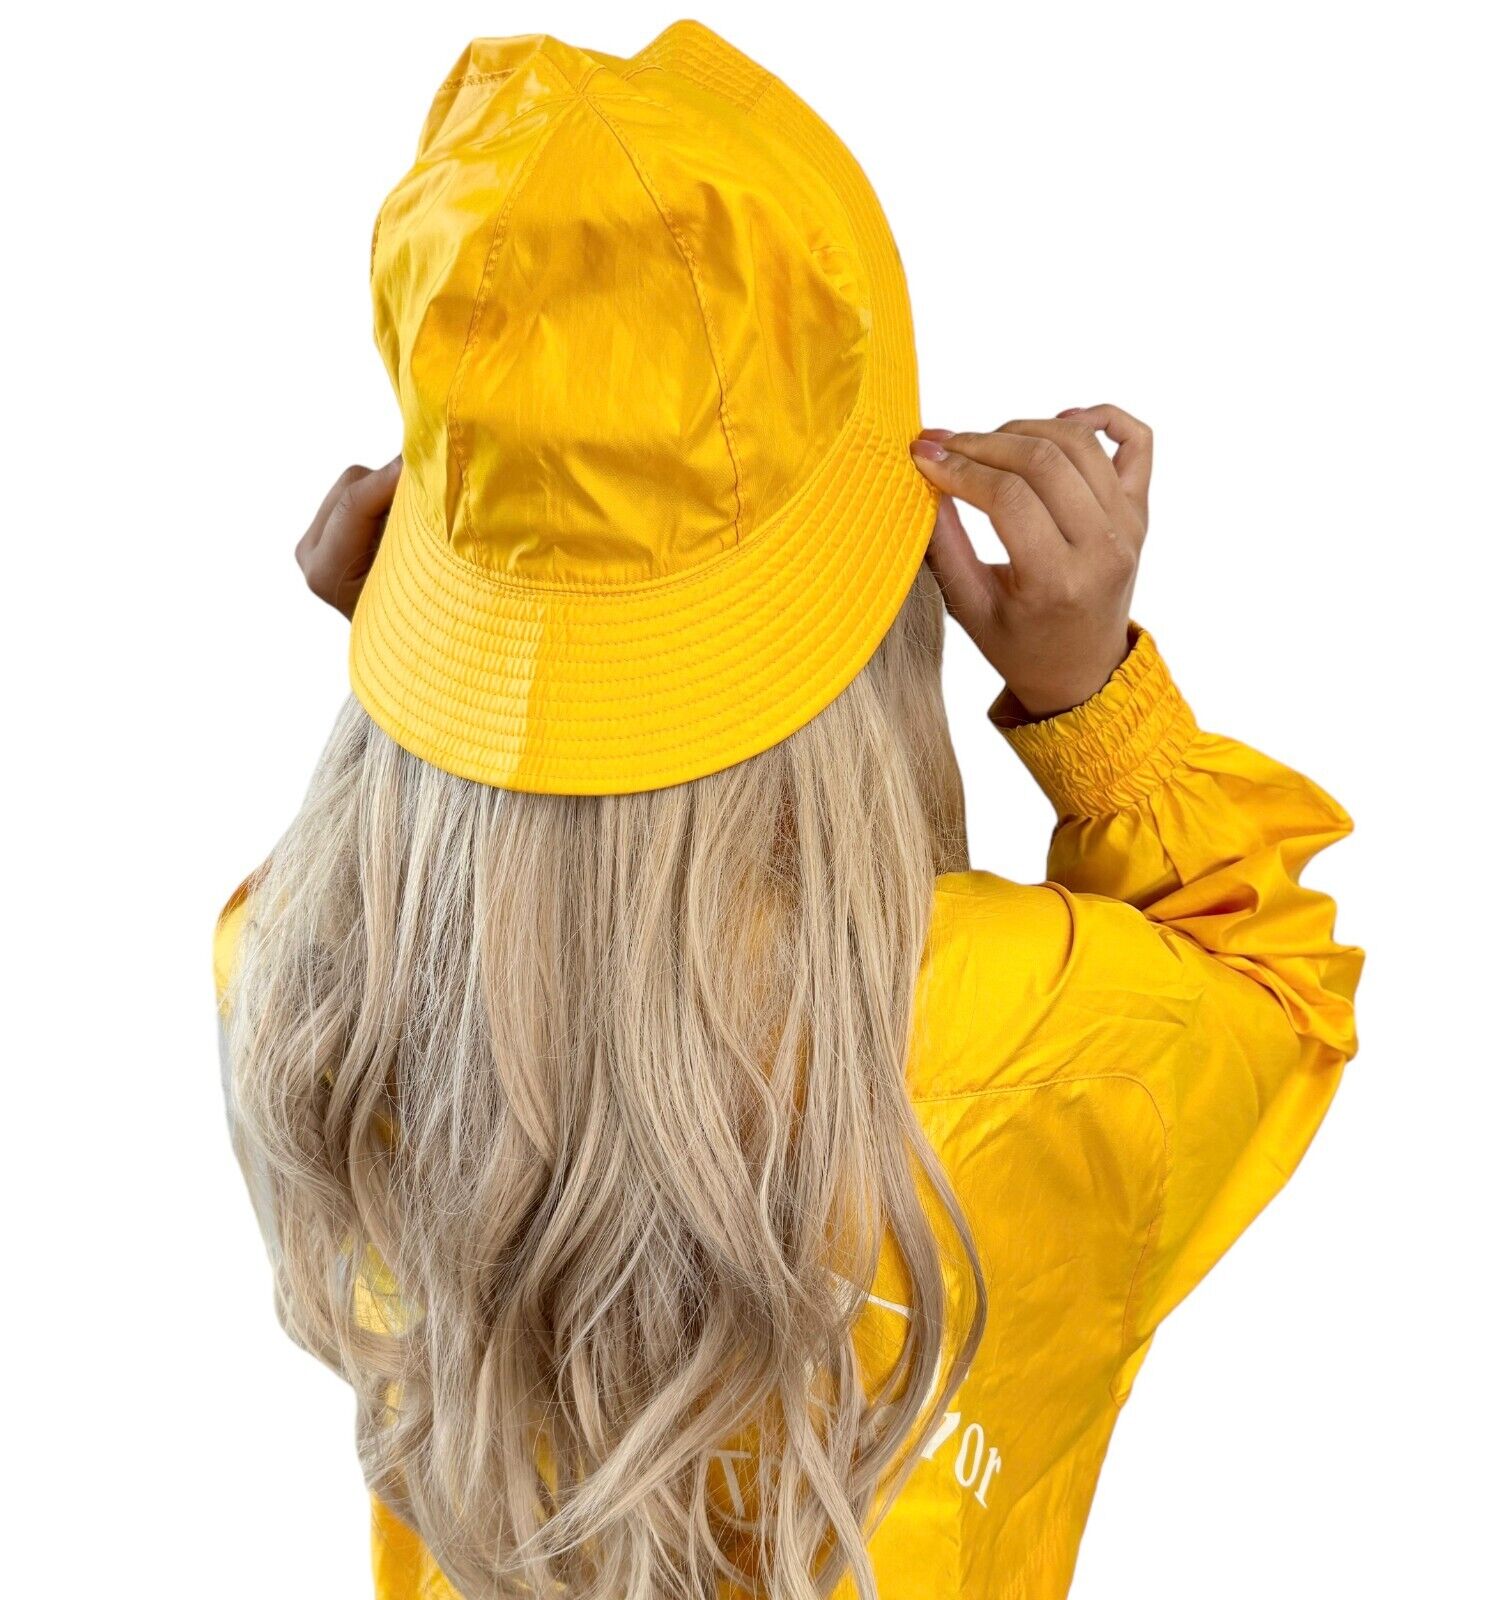 Christian Dior Sports Vintage Big Logo Track Jacket #M Yellow Polyester w/Hat